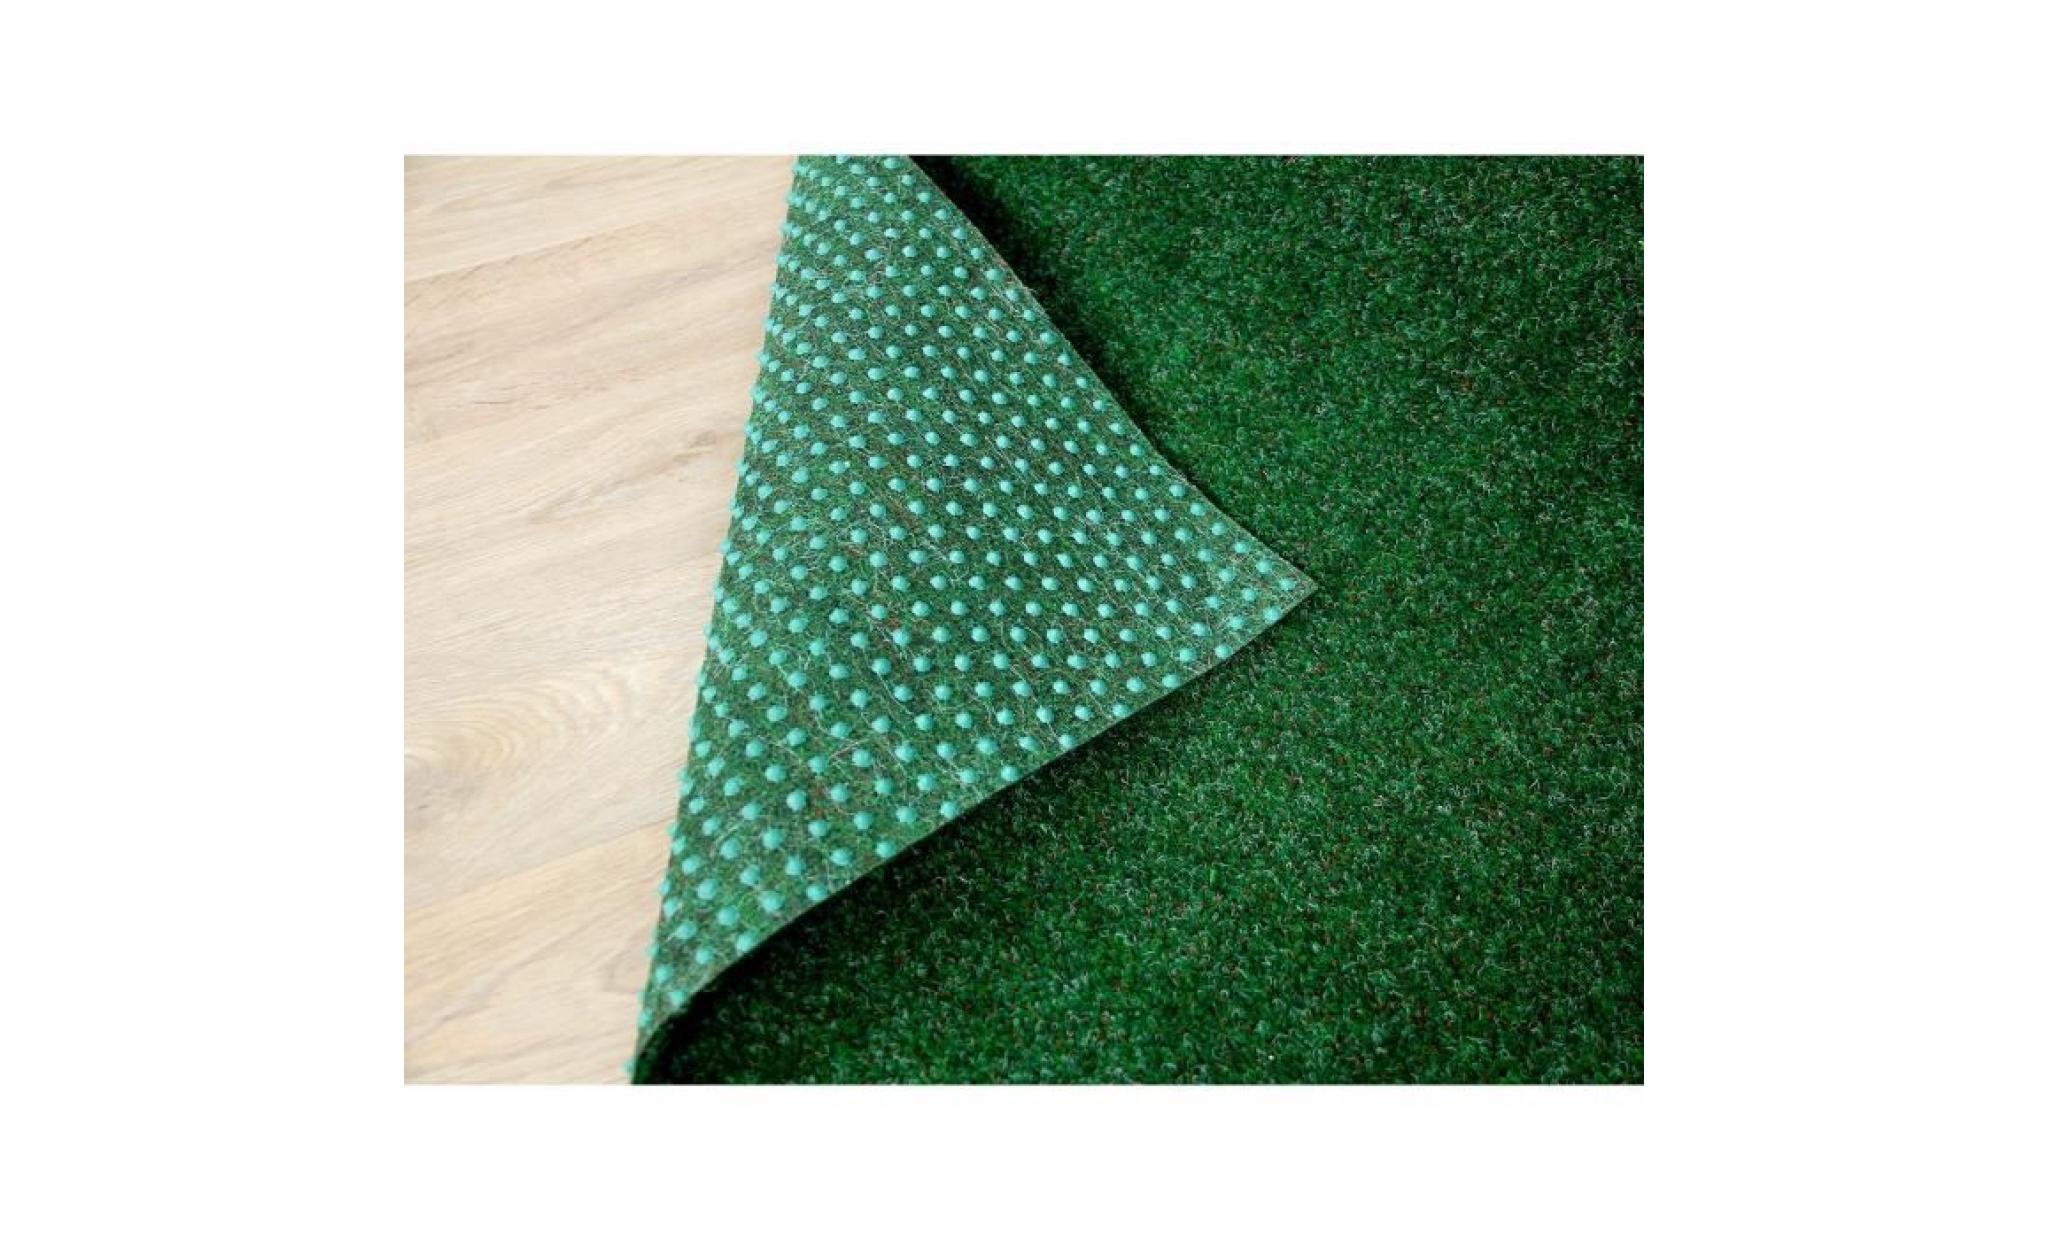 kingston   tapis type gazon artificiel – pour jardin, terrasse, balcon   beige [200x100 cm] pas cher